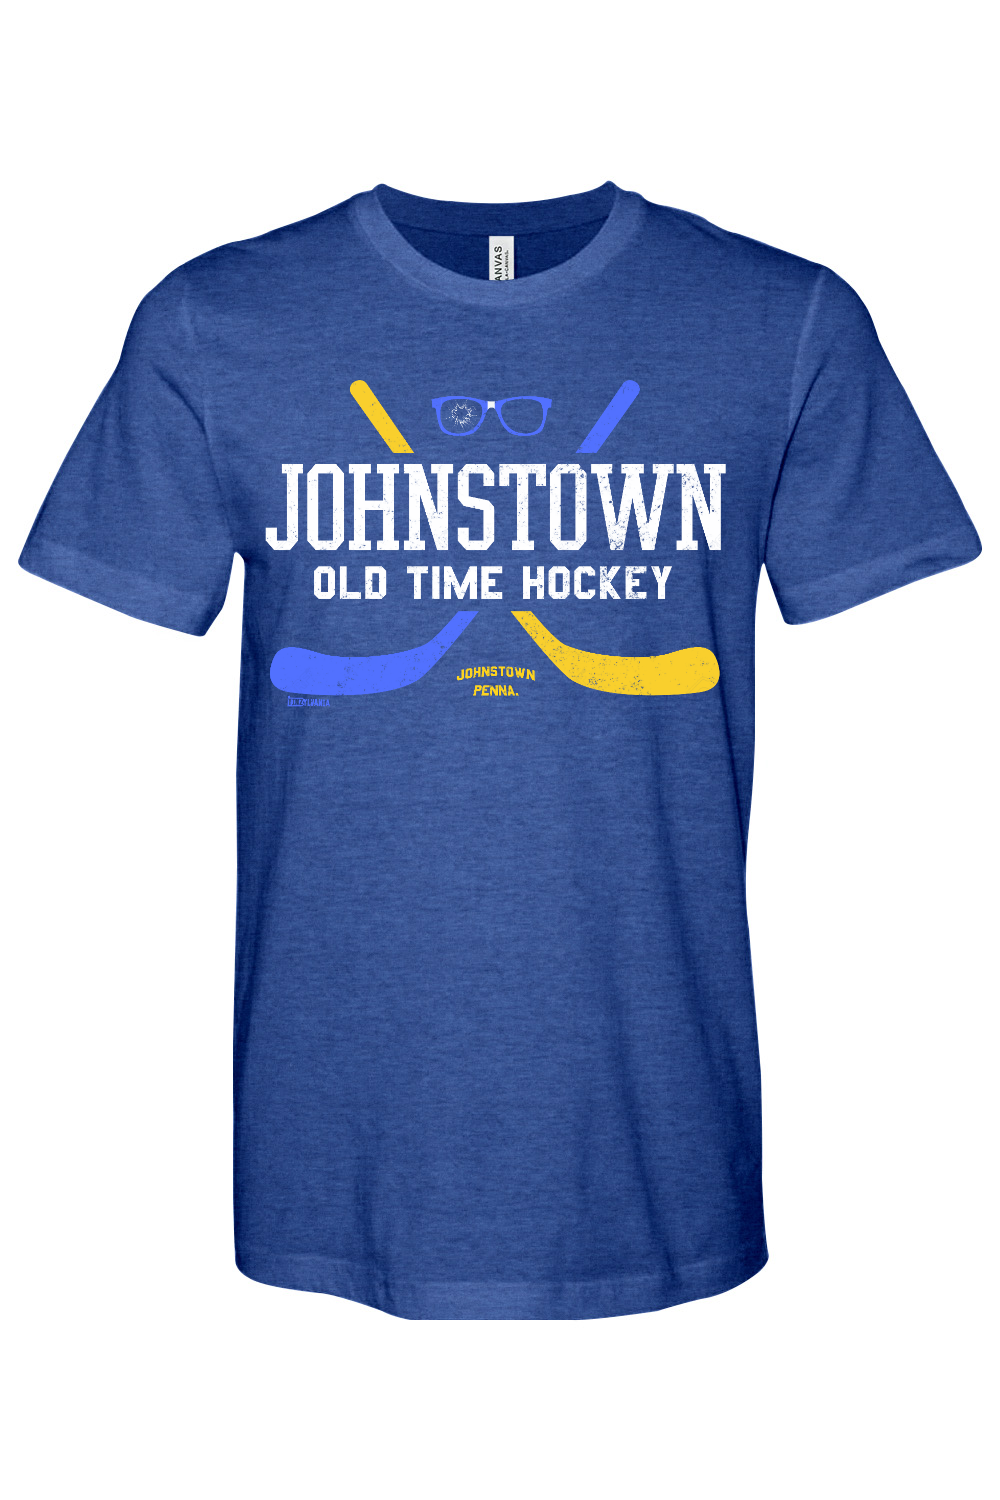 Johnstown - Old Time Hockey - Bella + Canvas Heathered Jersey Tee - Yinzylvania